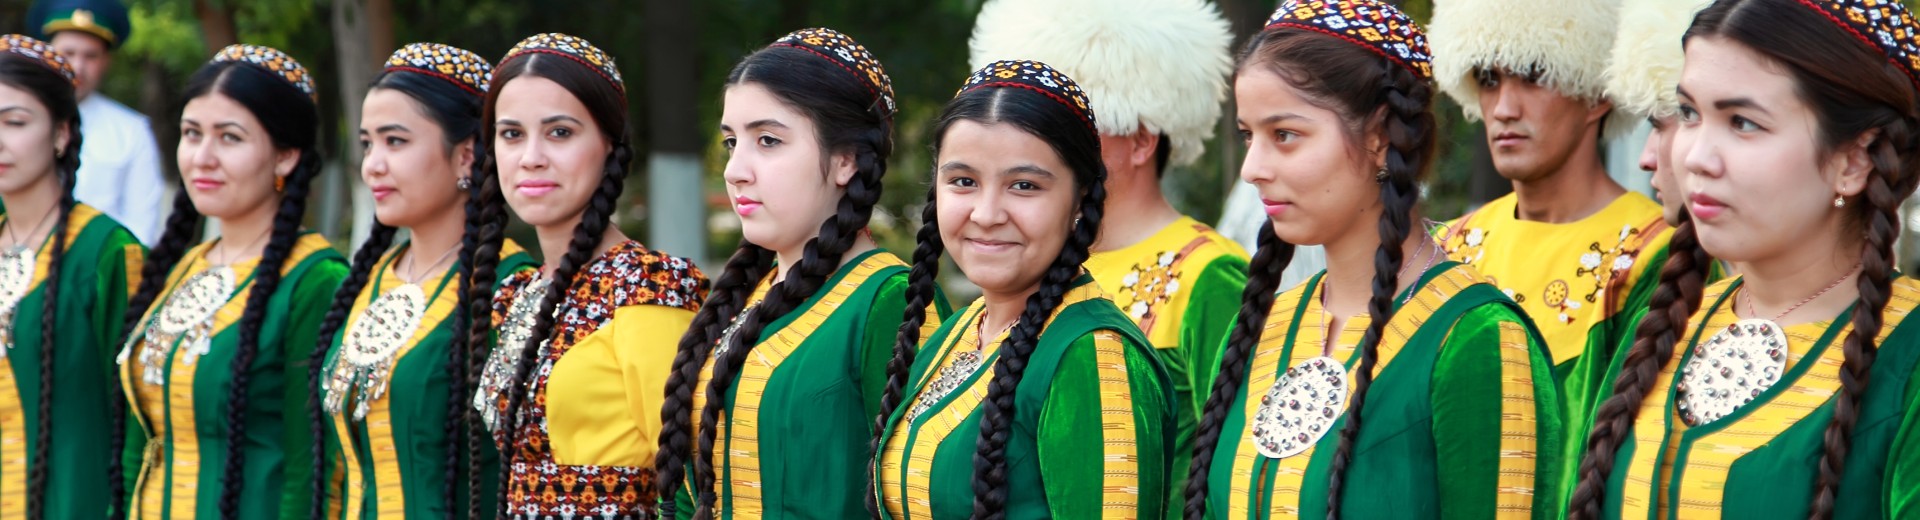 Familiereizen naar Turkmenistan